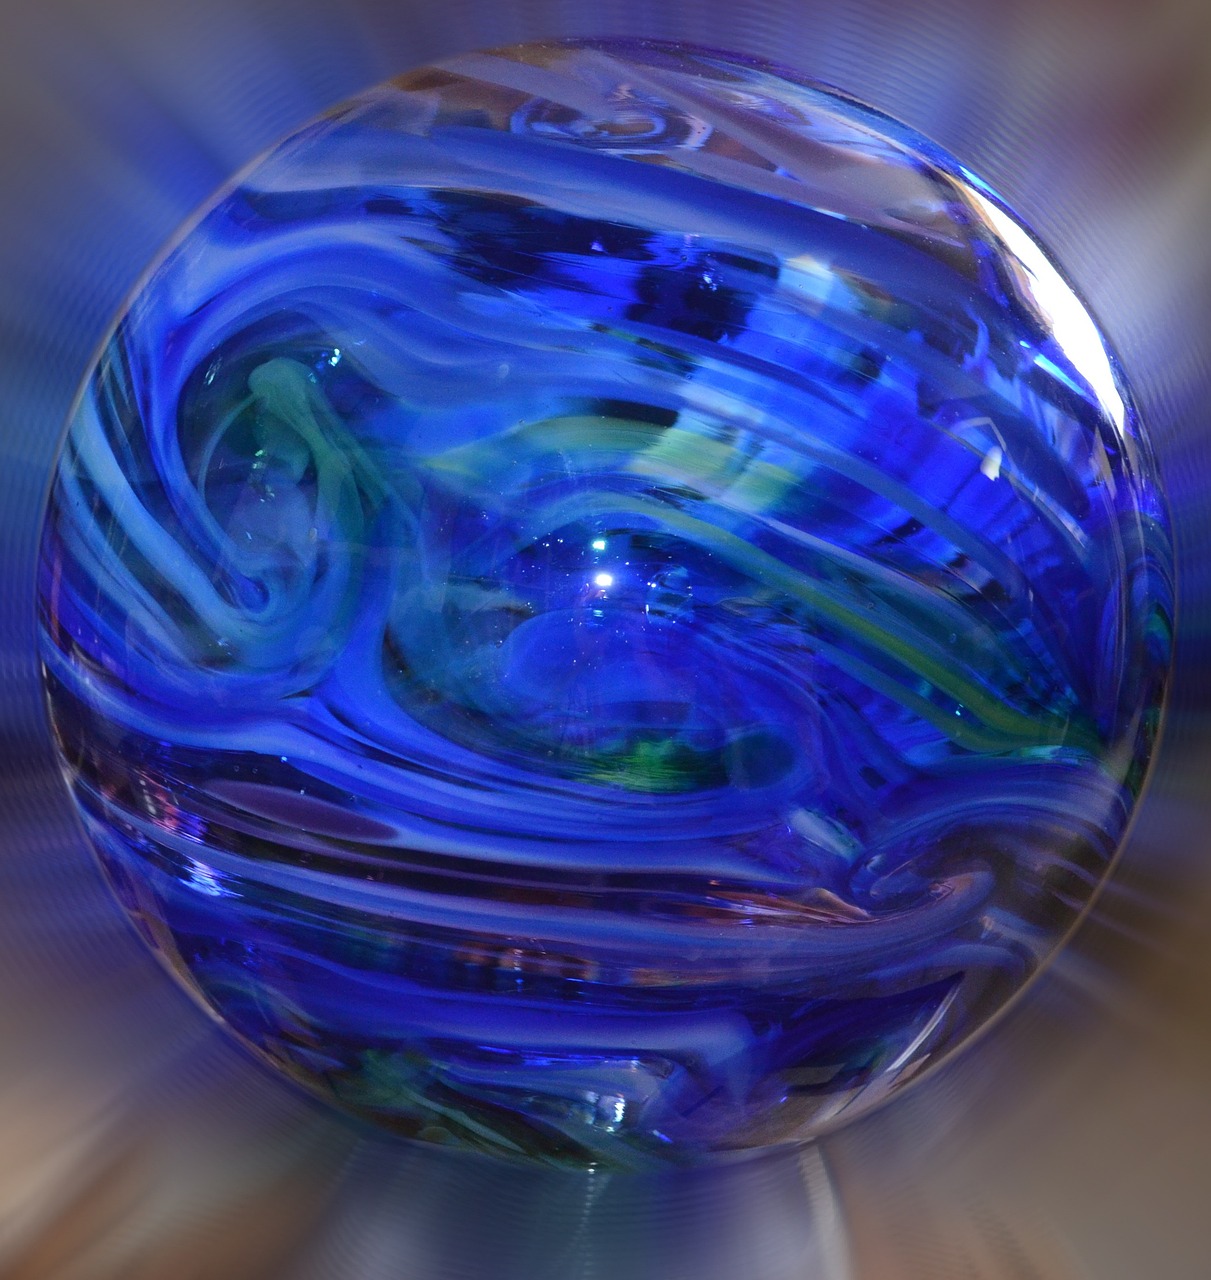 a close up of a glass ball on a table, digital art, by Arnie Swekel, flickr, digital art, lapis lazuli, spinning whirlwind, iridescent venetian blown glass, 1 / 4 portrait